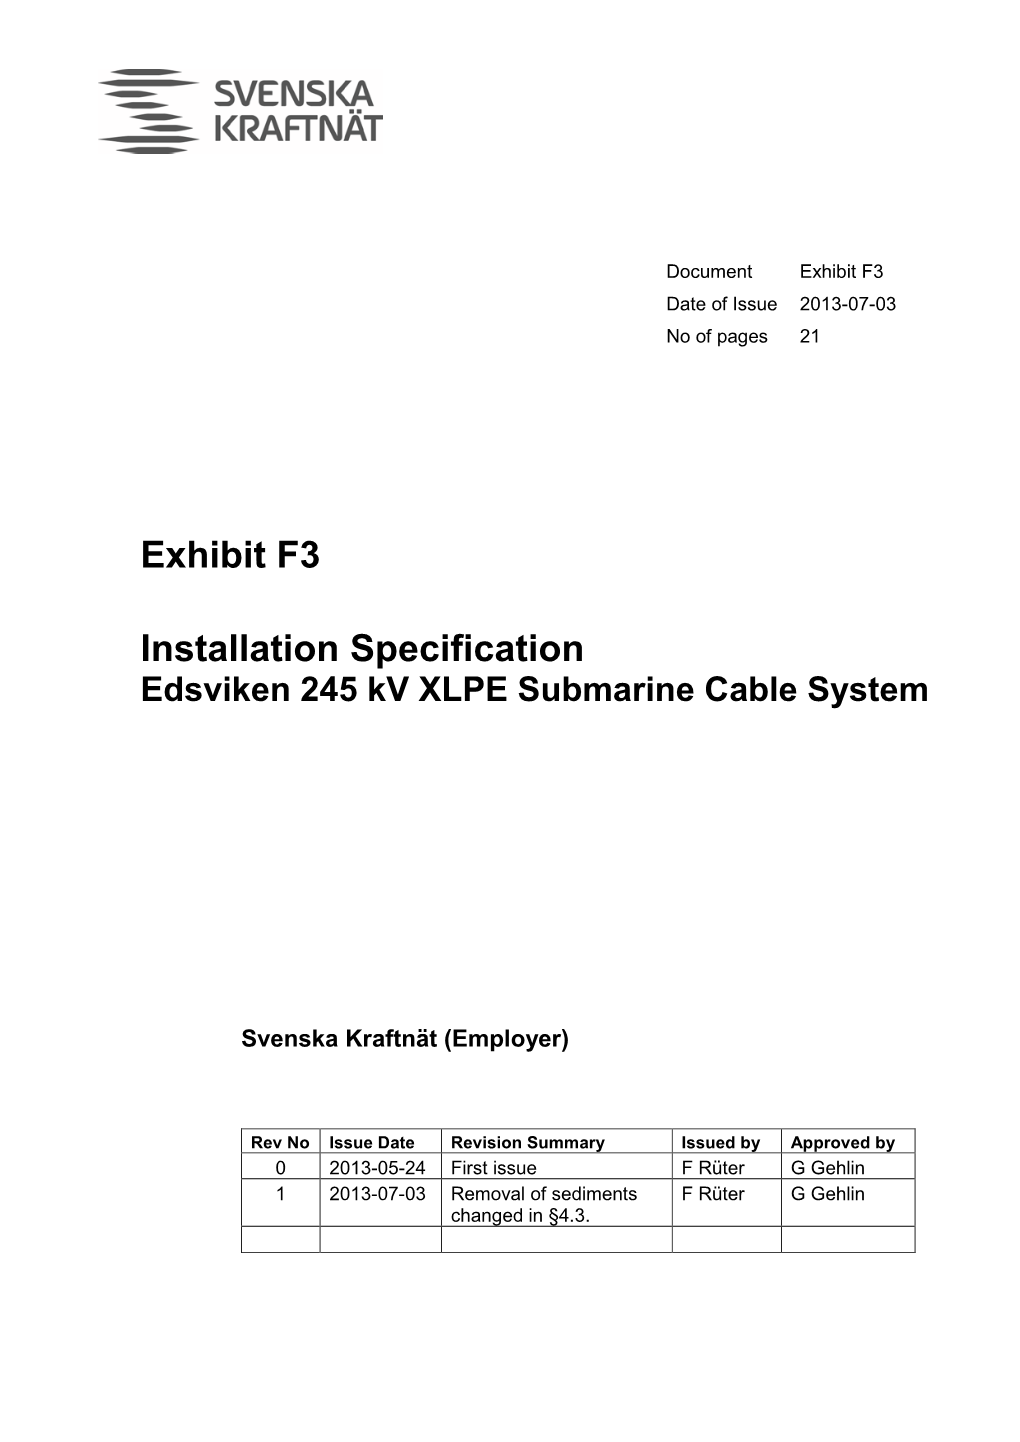 Exhibit F3 Installation Specification Edsviken 245 Kv XLPE